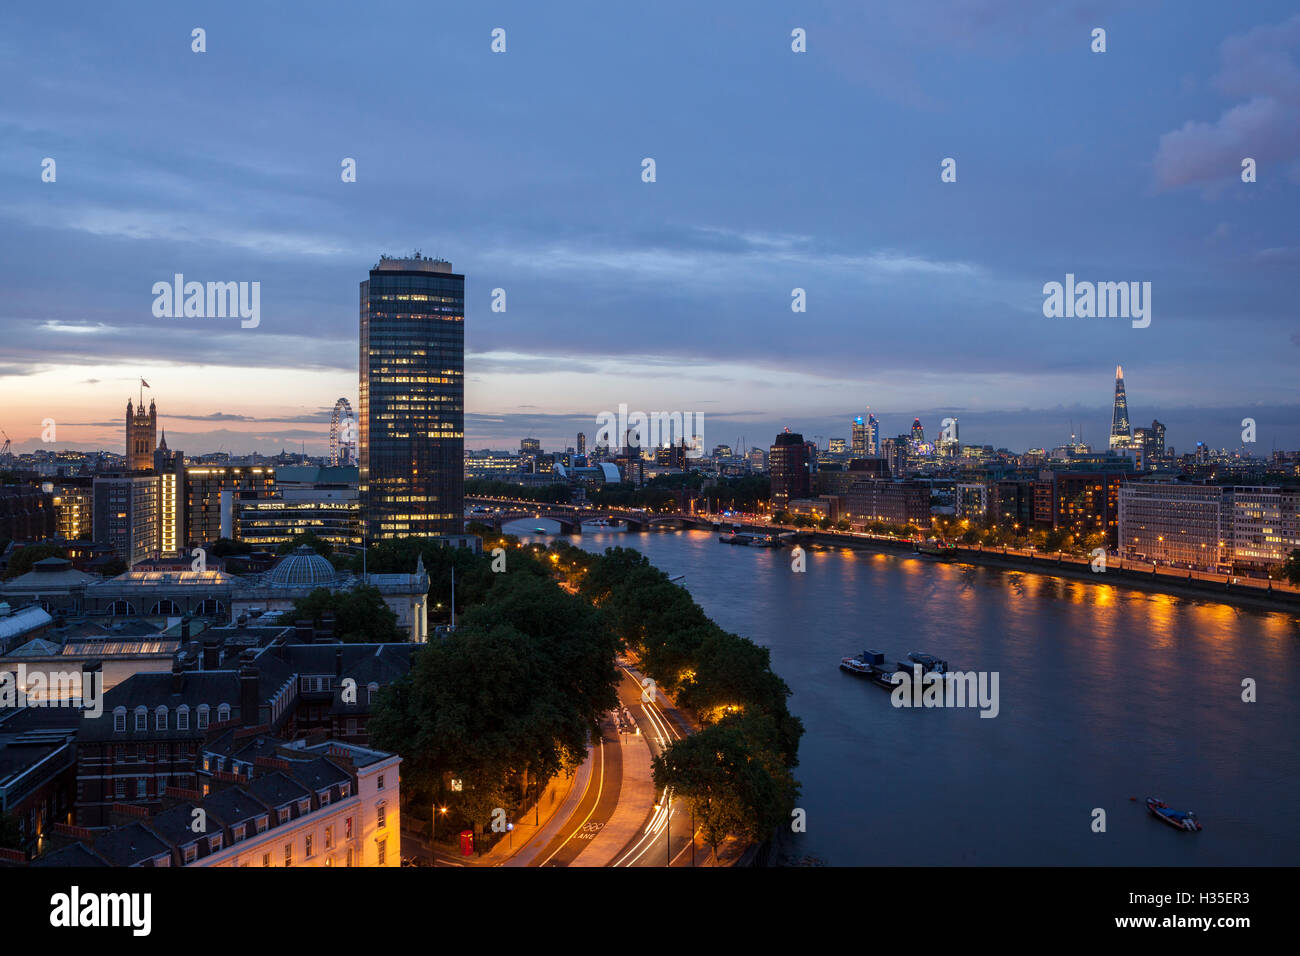 Tilt Shift lens effect image of the River Thames from the top of Riverwalk House, London, England, UK Stock Photo